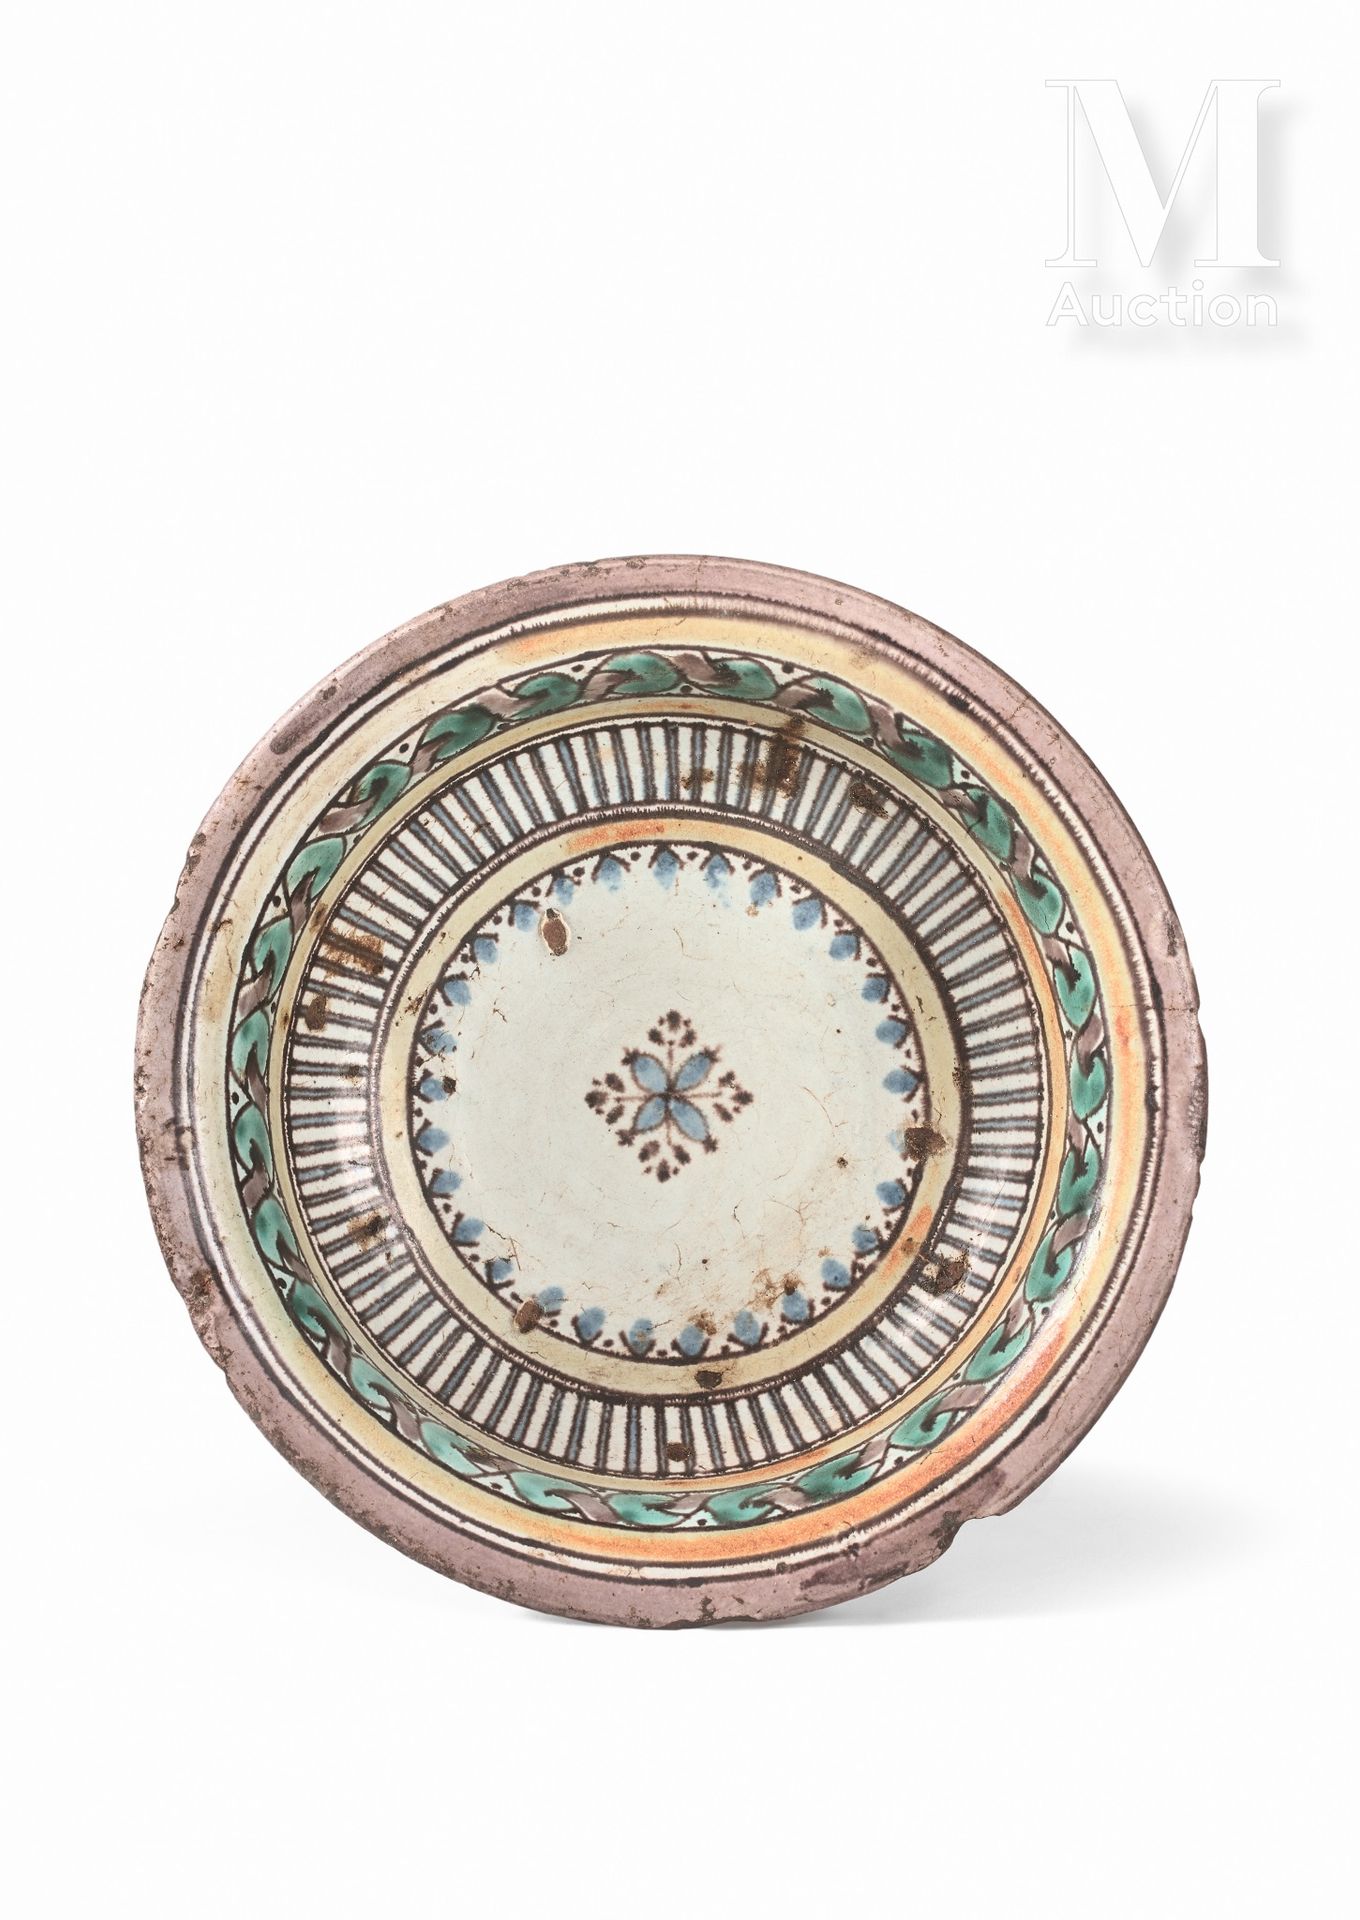 Tobsil de Fès Marruecos, siglo XVIII

Plato de cerámica sobre pedestal decorado &hellip;